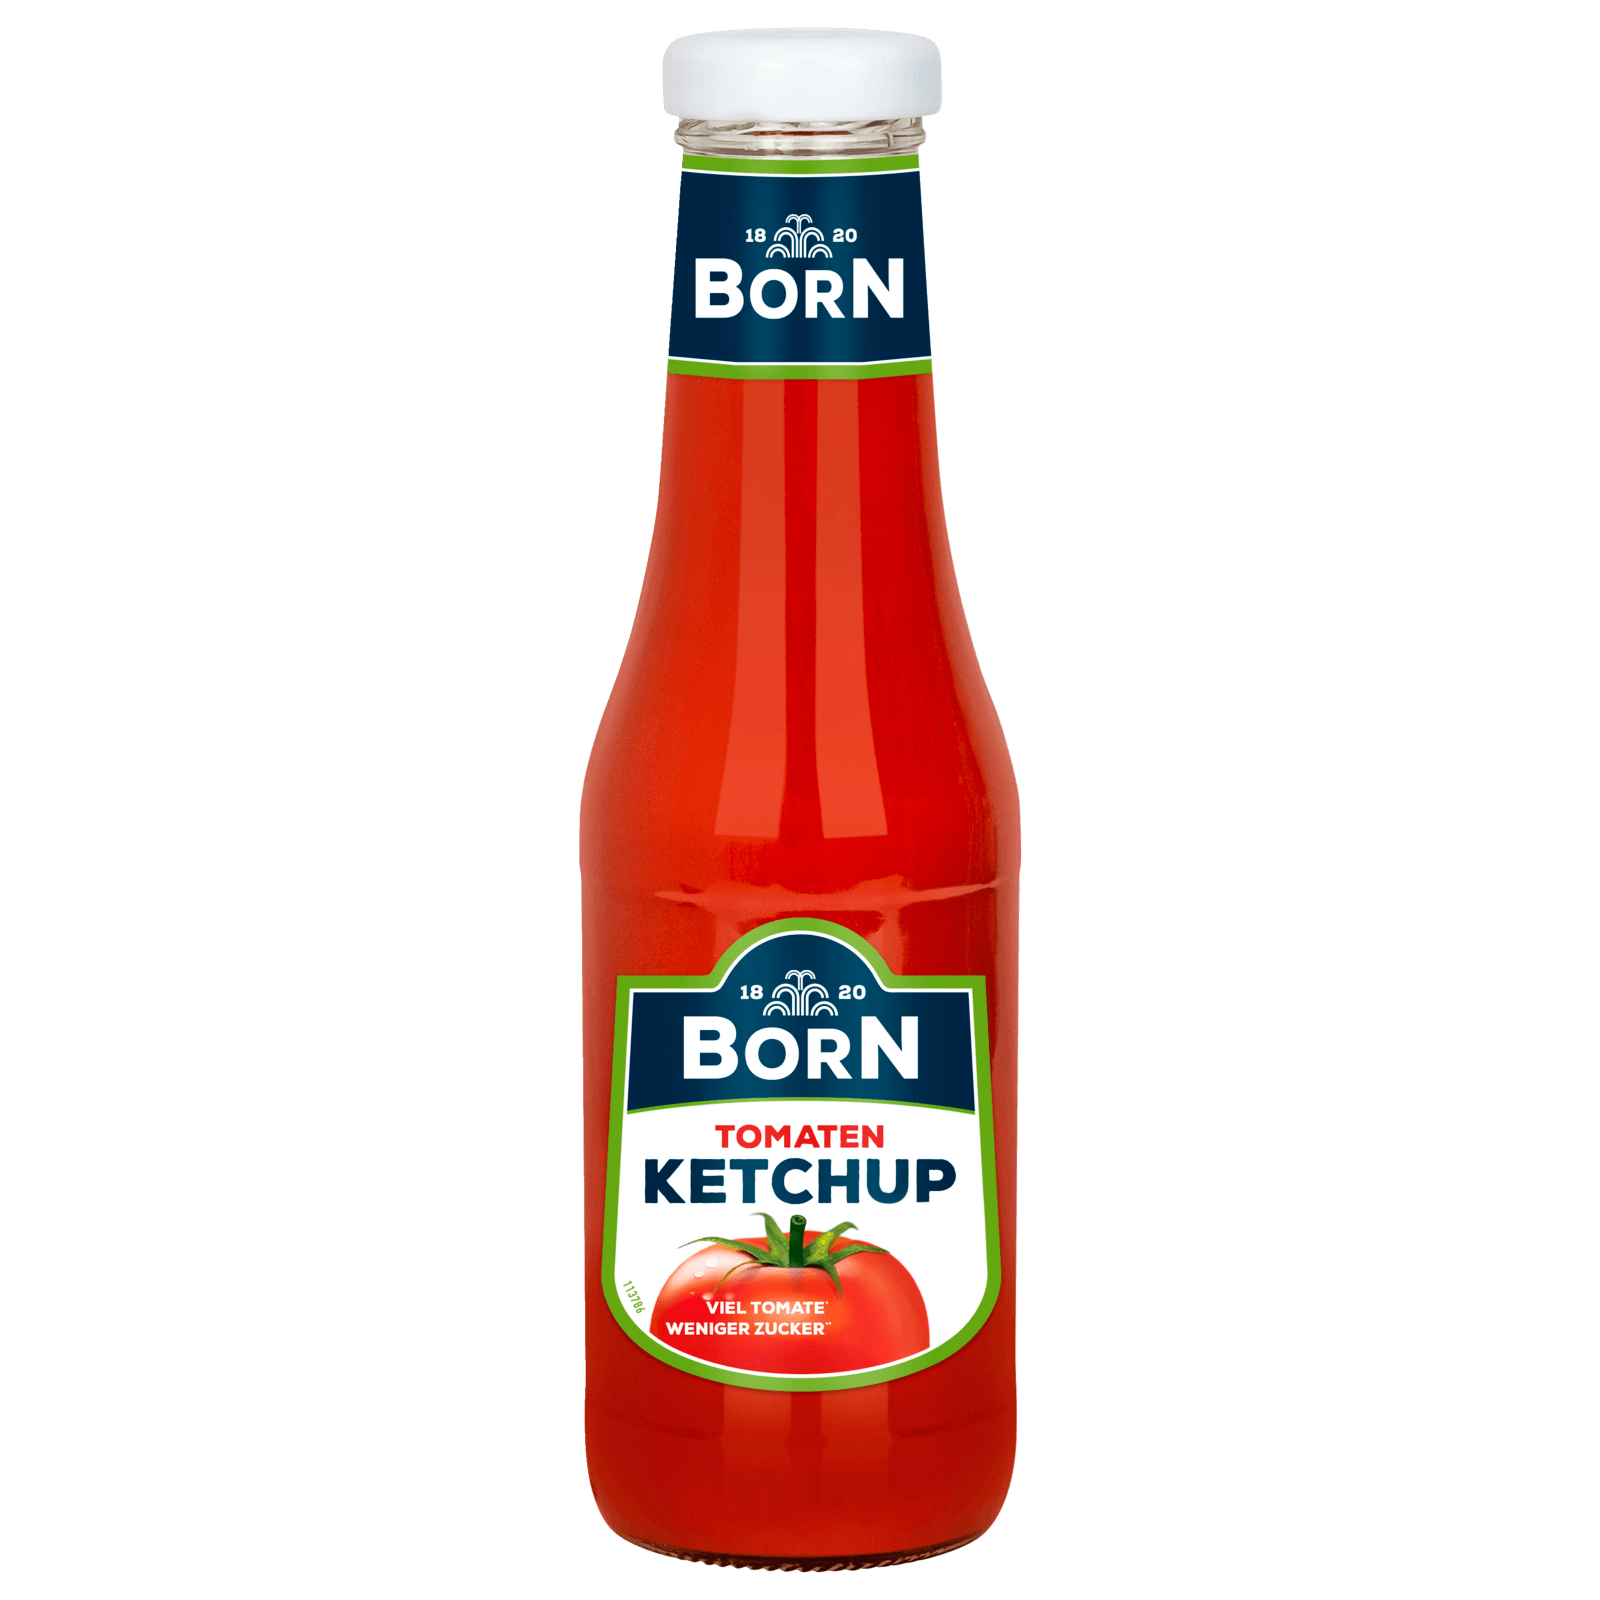 Born Tomaten Ketchup 450ml bei REWE online bestellen!